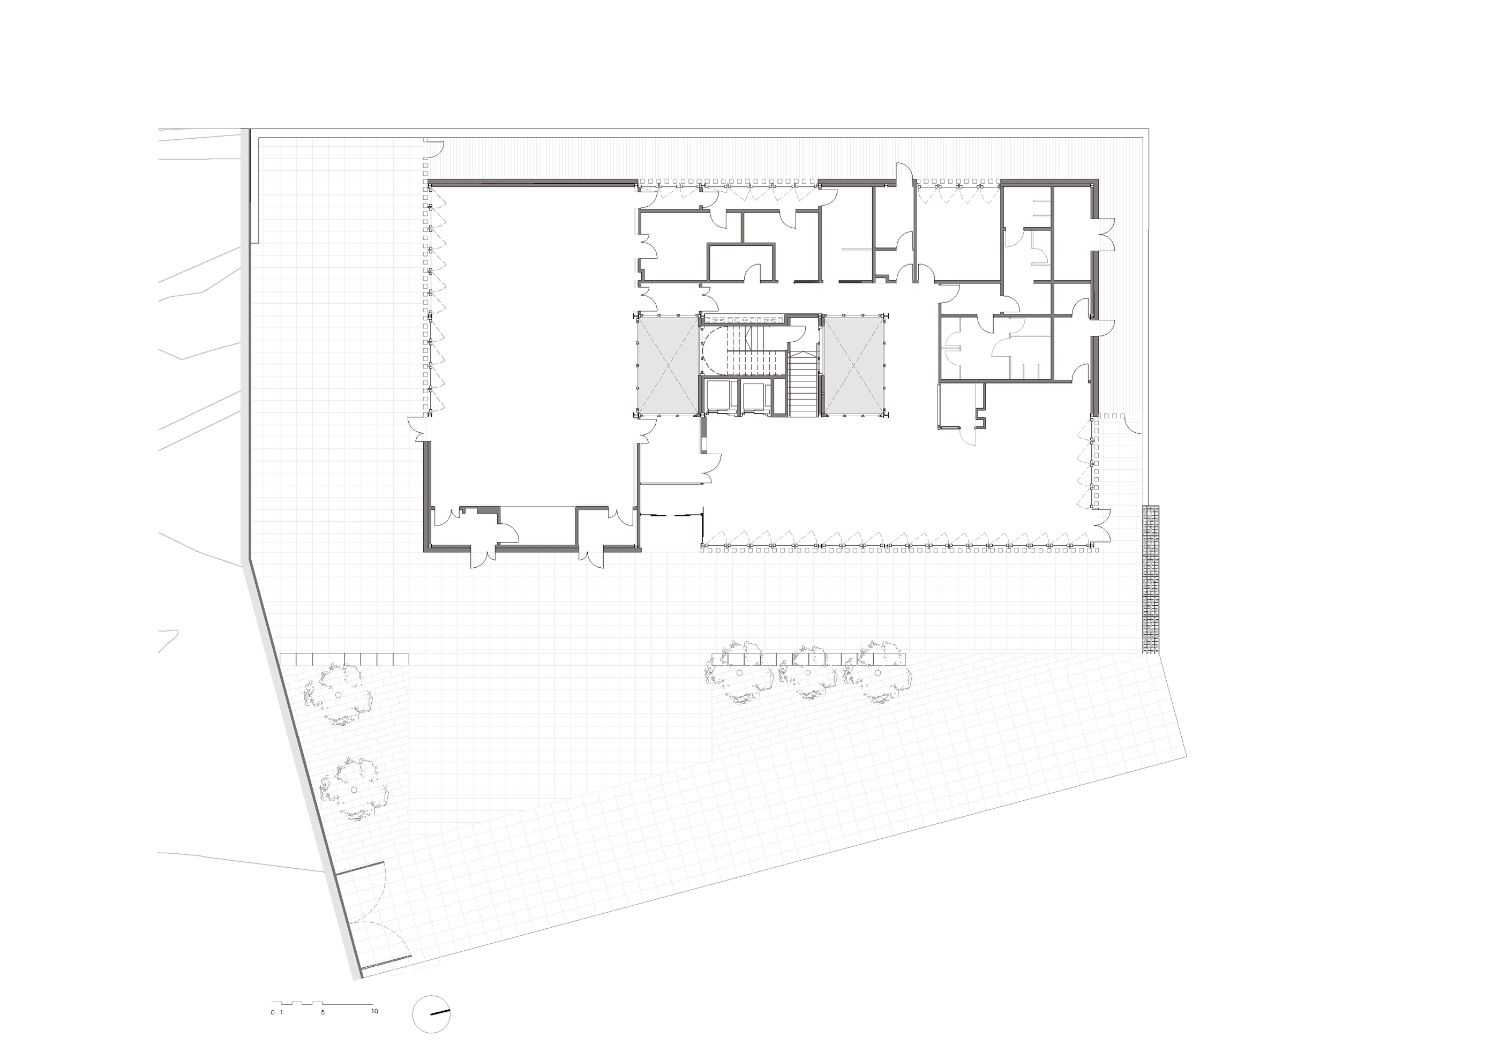 Ground floor plan drawing of Centre for Community Life in Trinitat Vella